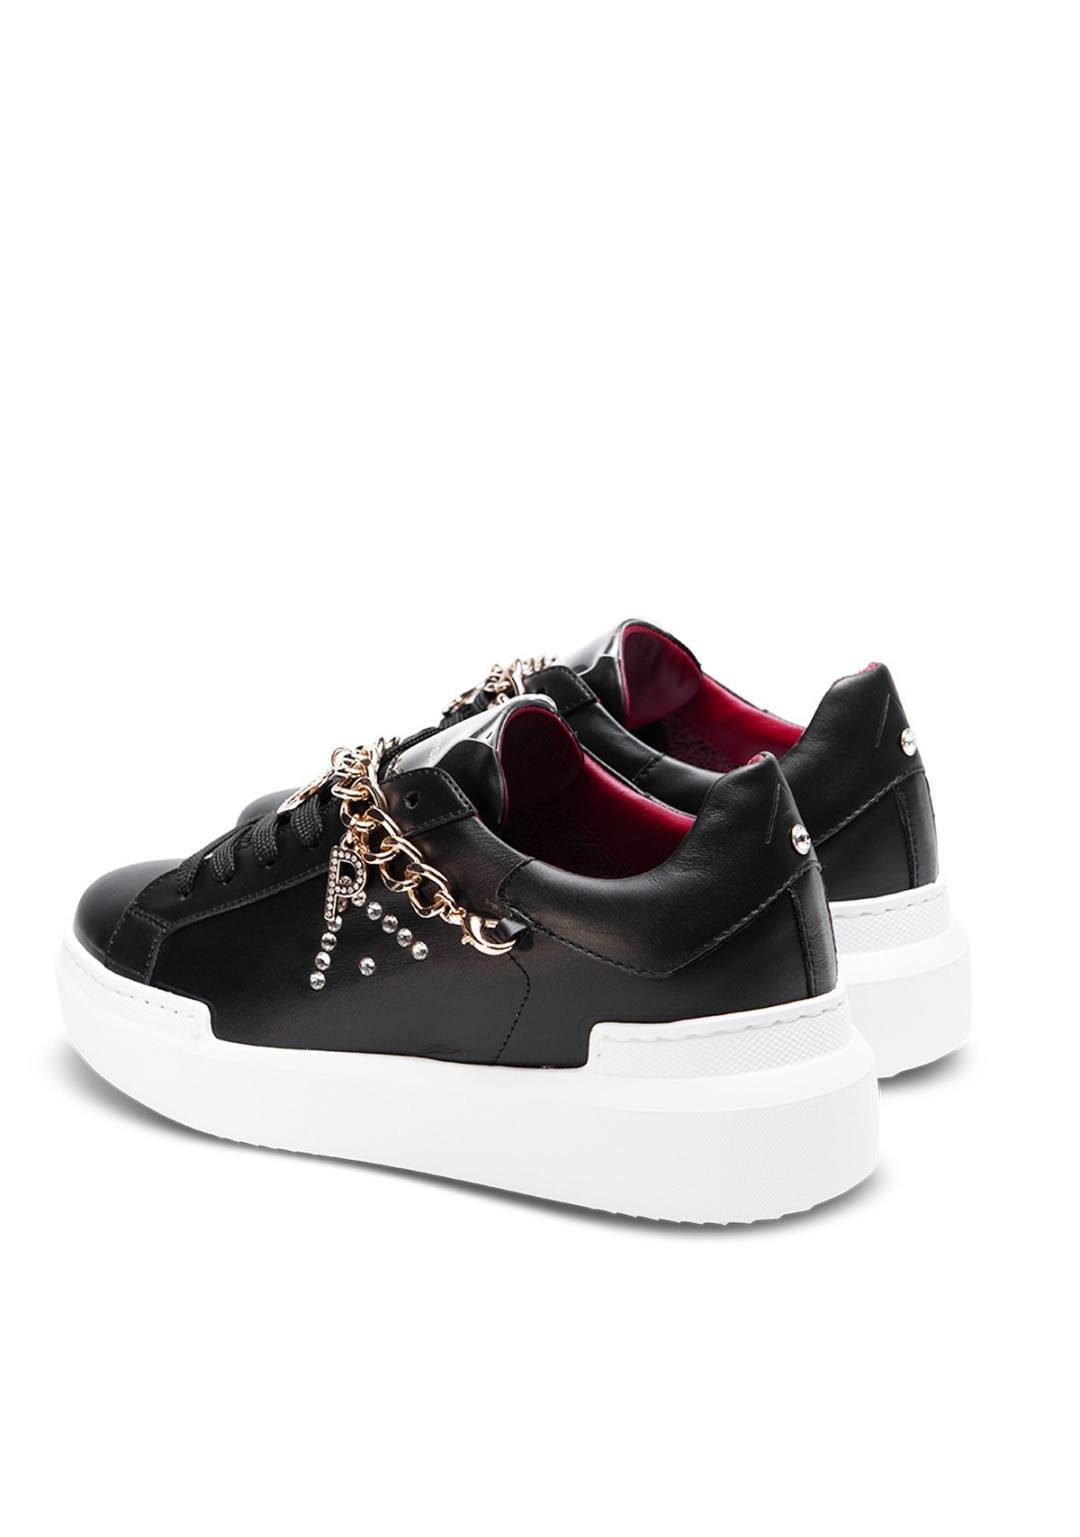 ED PARRISH - Sneaker Catena - Donna - CKLD-LT81